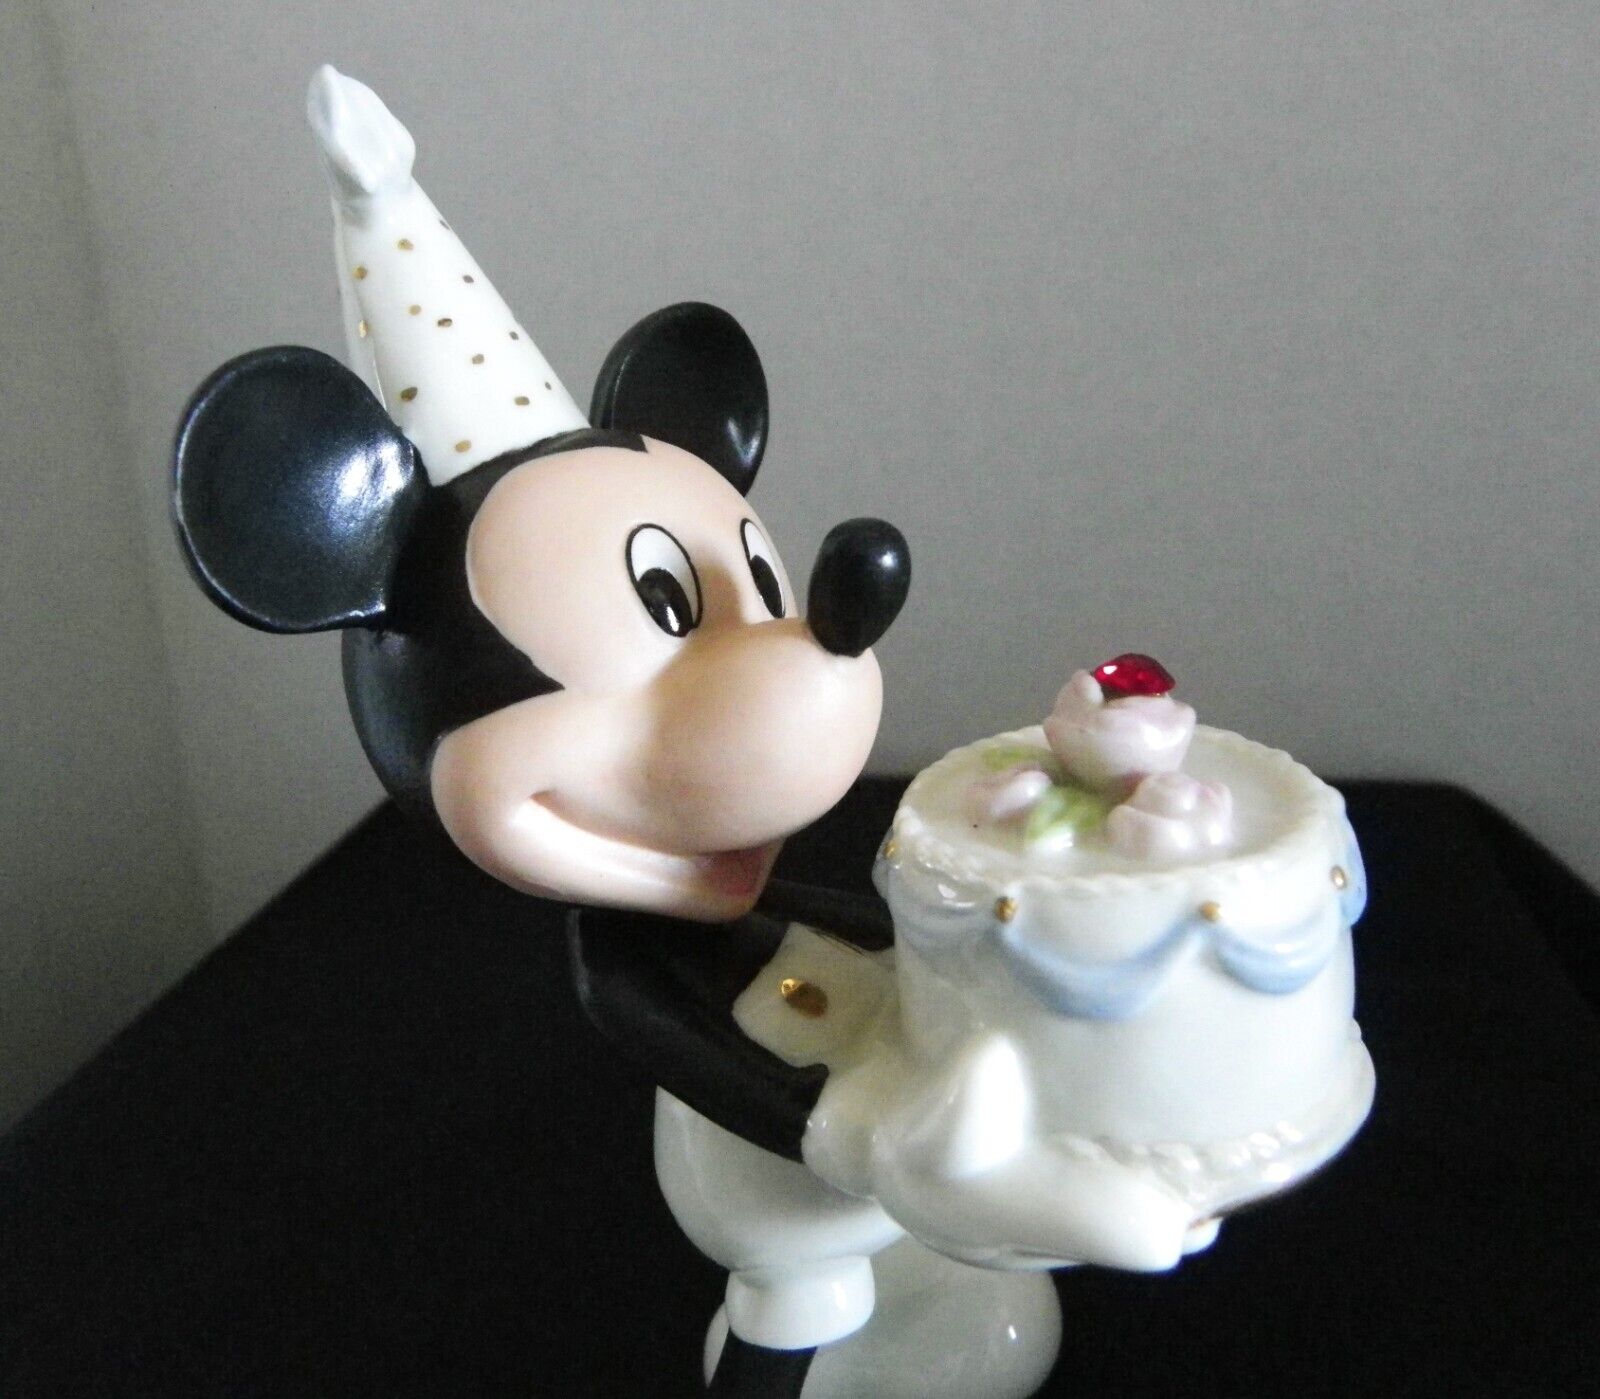 Lenox Disney Mickey Mouse Figurine Happy Birthday with cake RUBY birthstone july